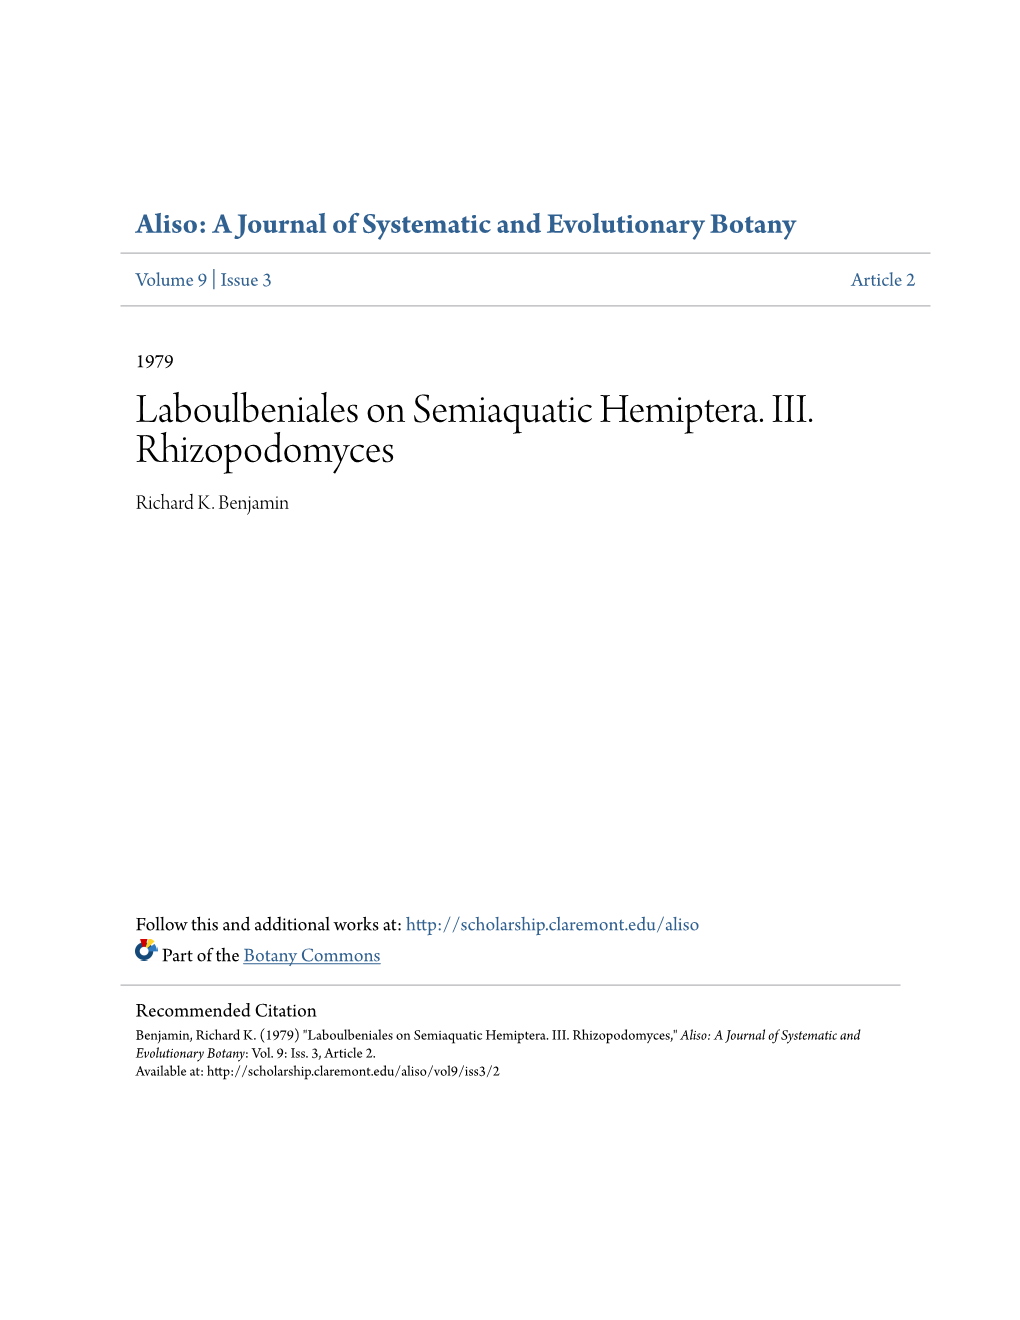 Laboulbeniales on Semiaquatic Hemiptera. III. Rhizopodomyces Richard K